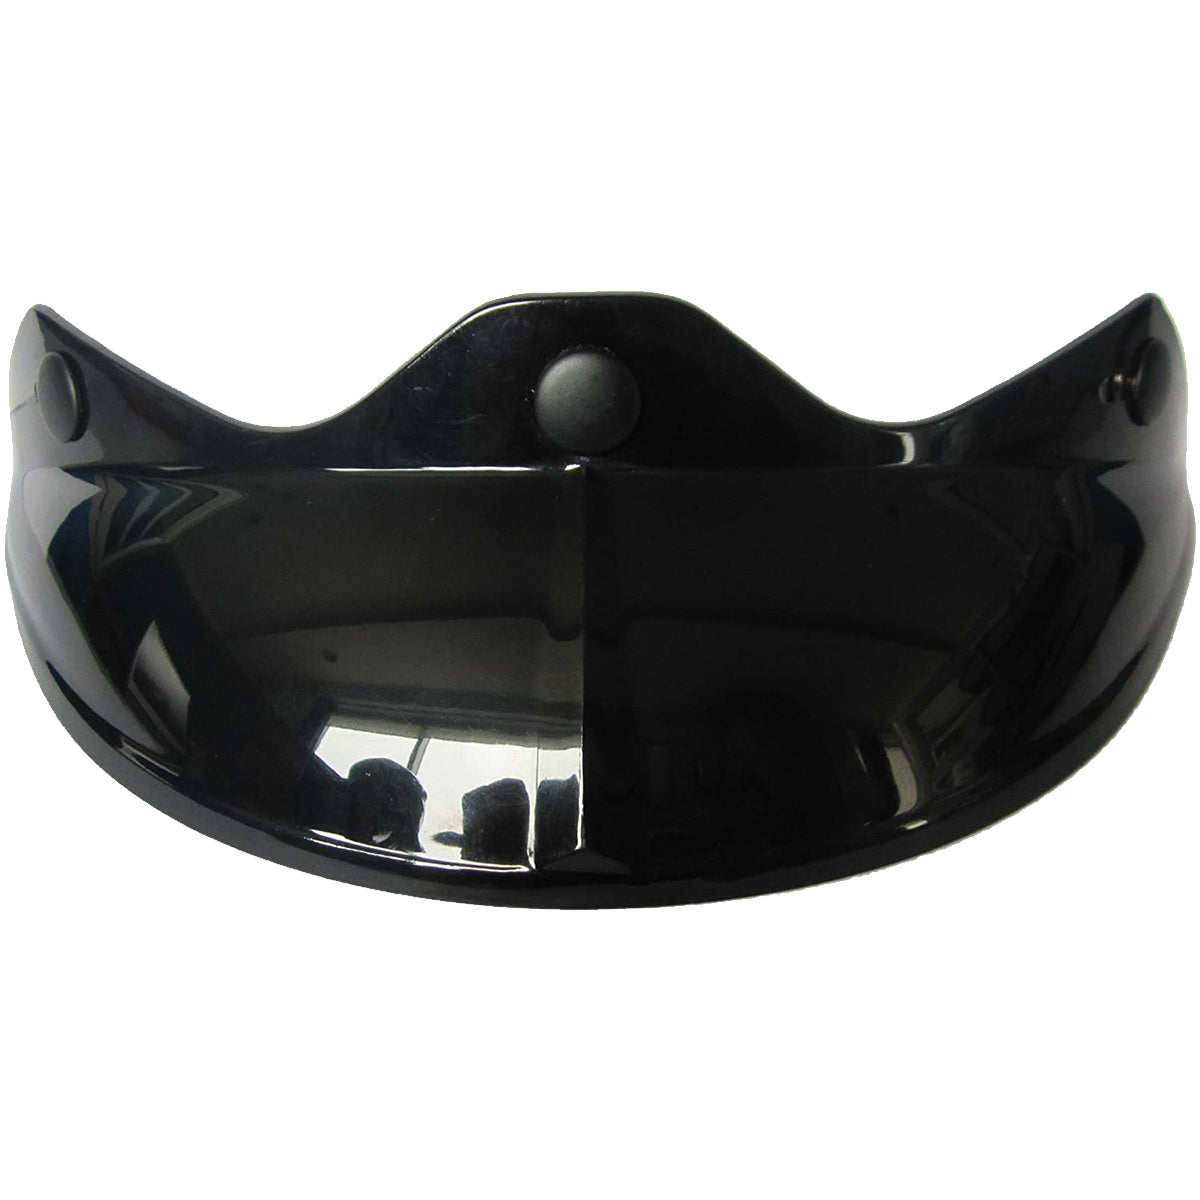 LS2 Bagger/SC3 Peak Helmet Accessories-02-190